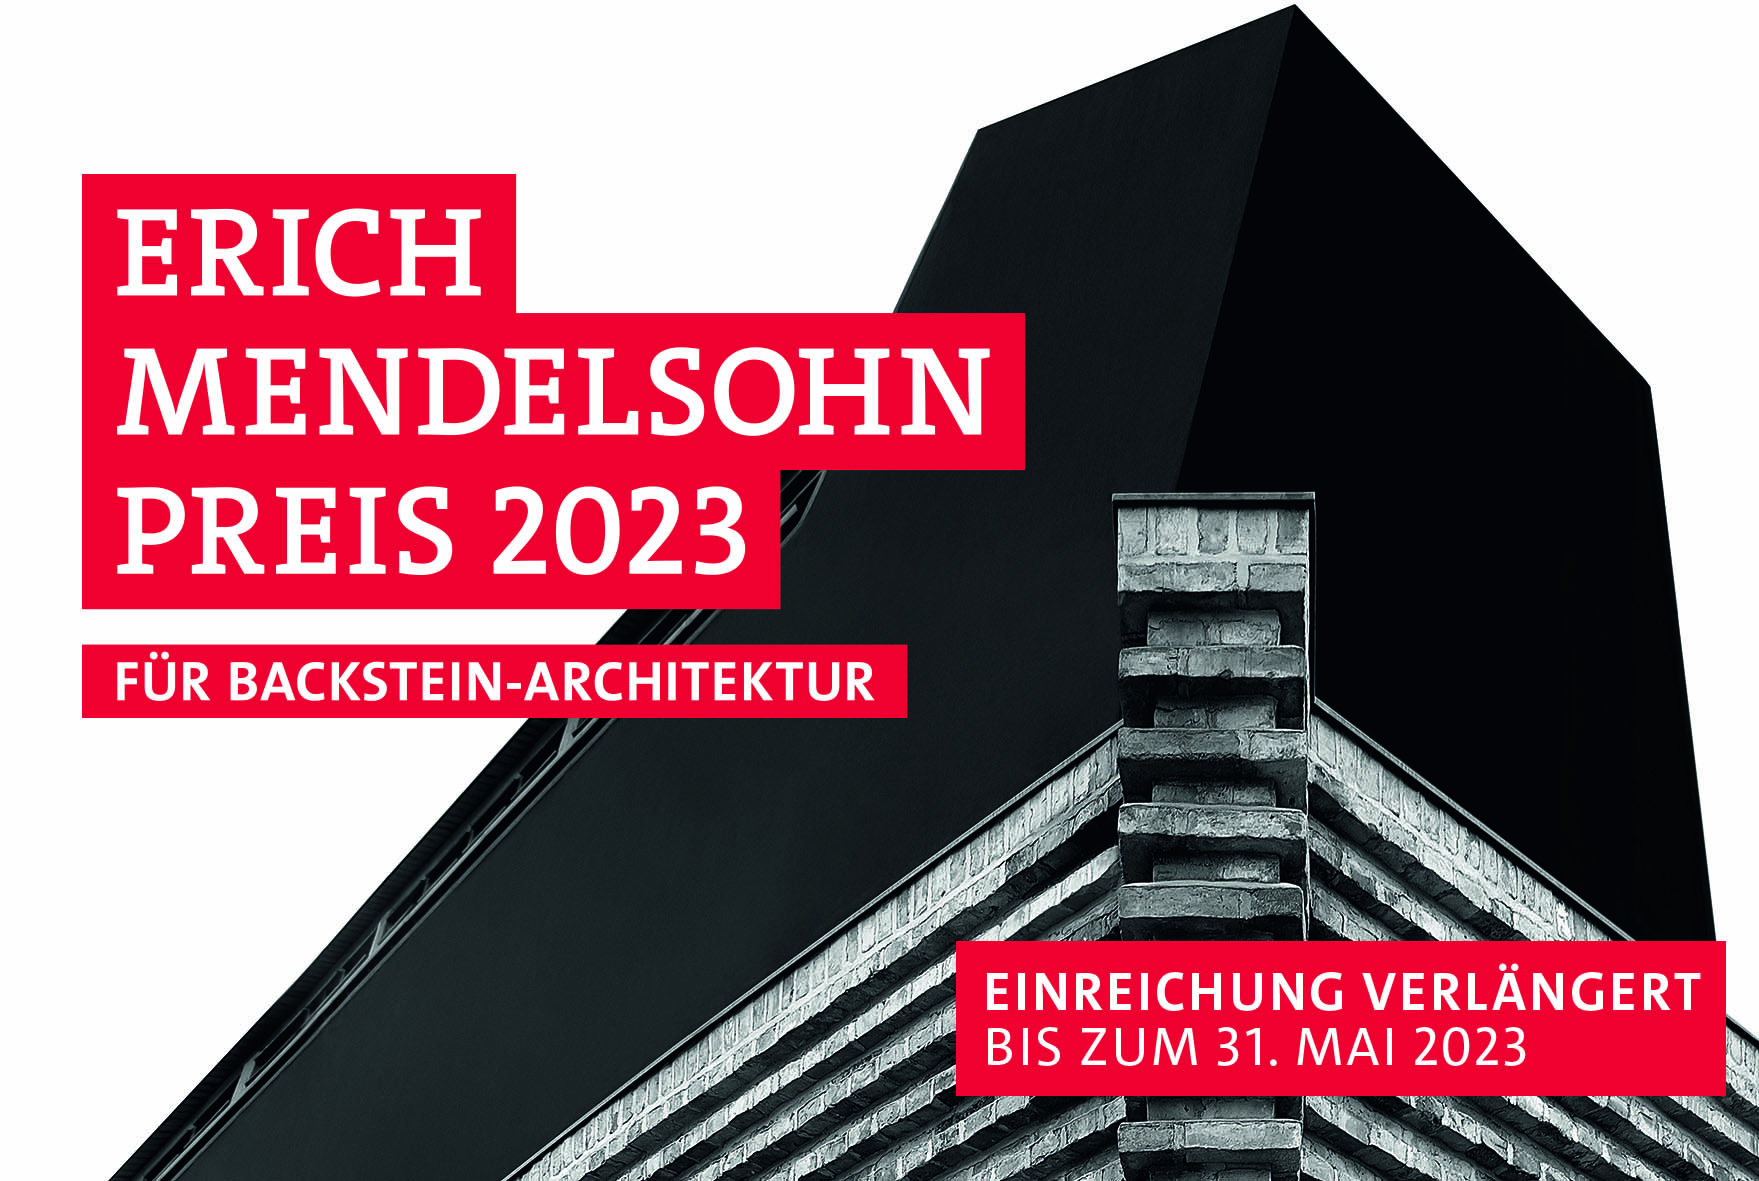 Erich-Mendelsohn-Preis 2023 für Backstein-Architektur verlängert Frist